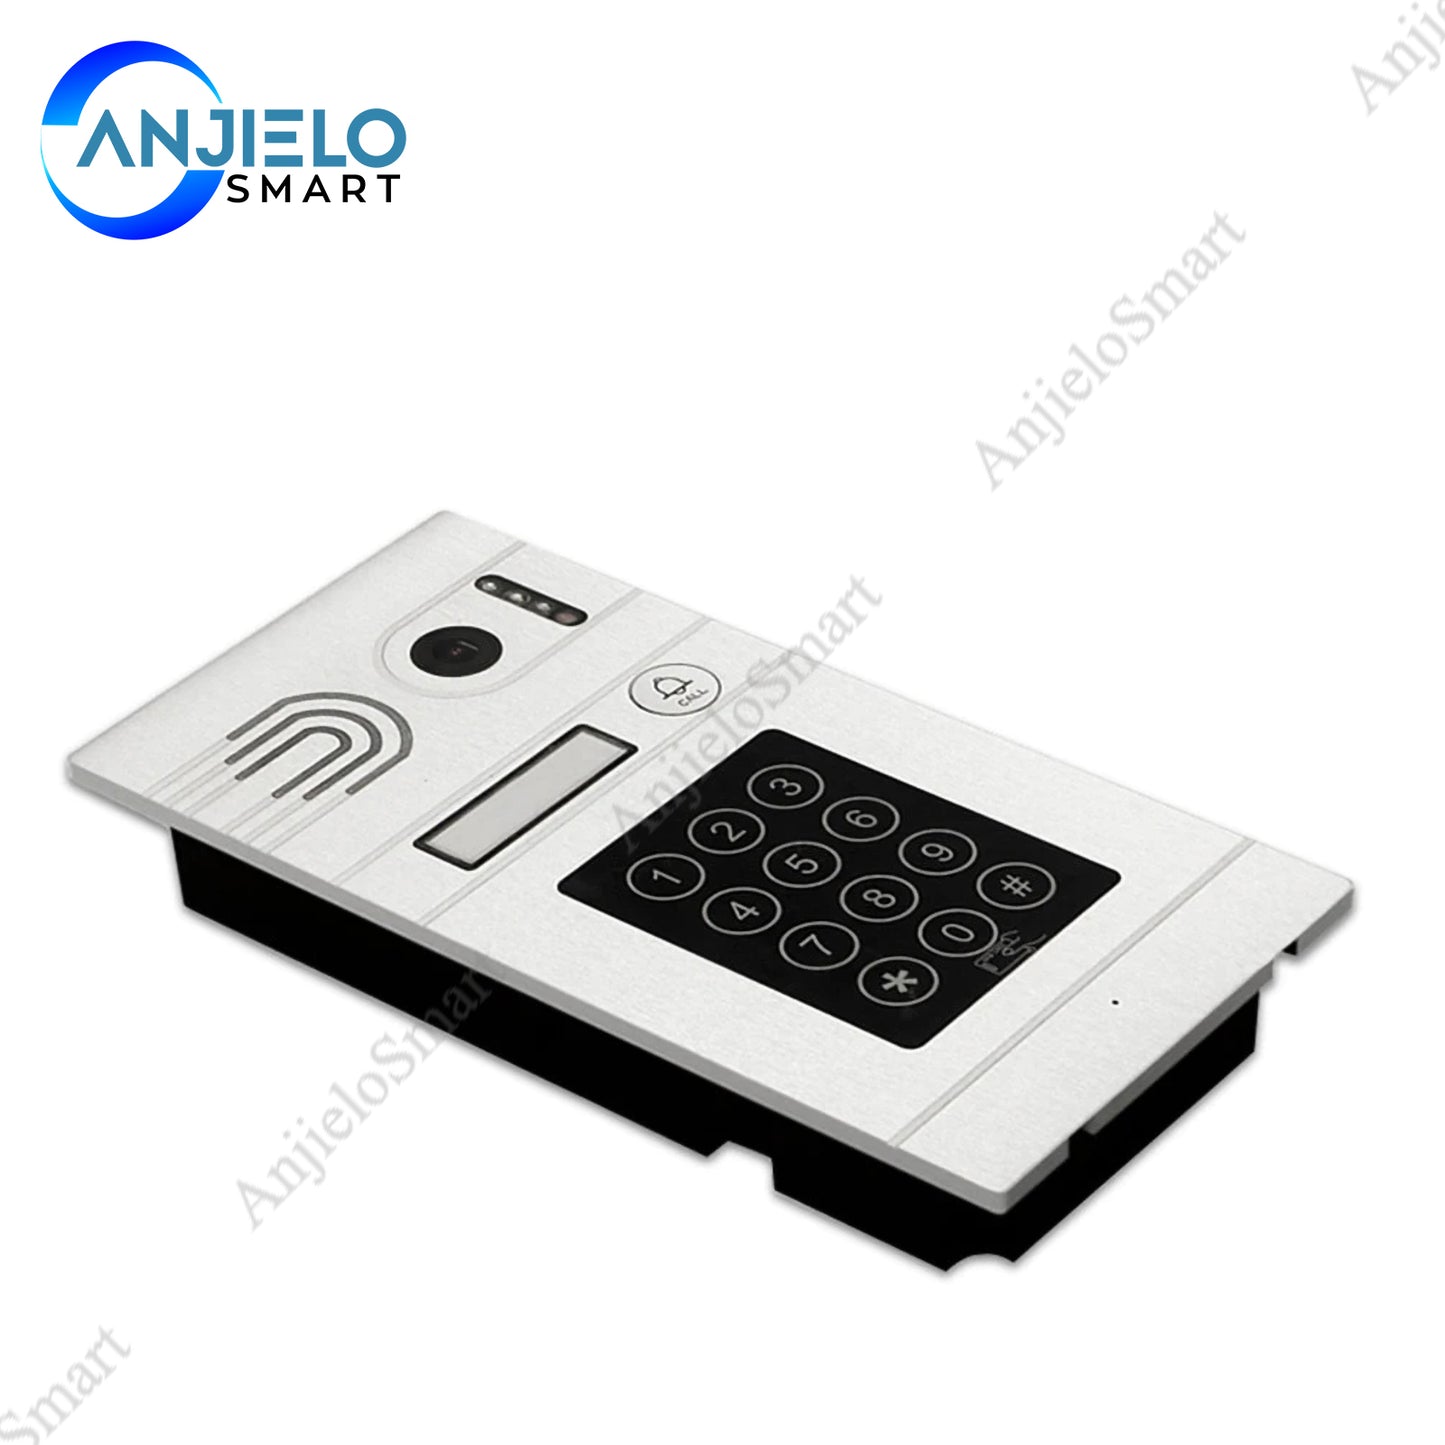 AnjieloSmart 7 inch HD WIFI Smart IP Indoor Monitor Video Door Phone Intercom System Video Recording iOS/Android Remote